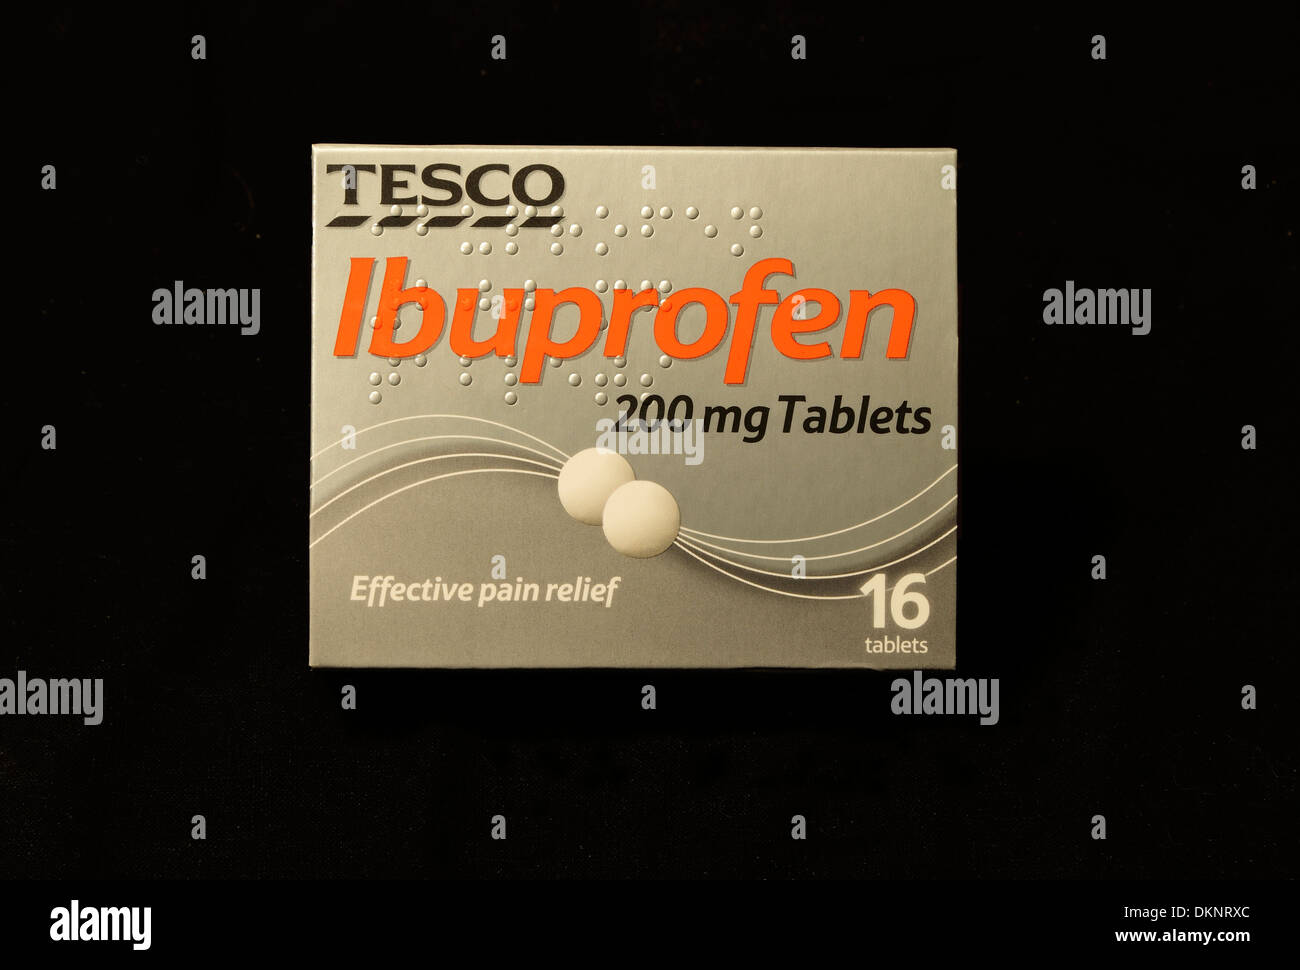 Tesco Ibuprofene 200mg compresse, neurofen, pack, pacchetti, pack, pacchetti, tablet, medicina, medicinali, pain killer killers UK mg Foto Stock